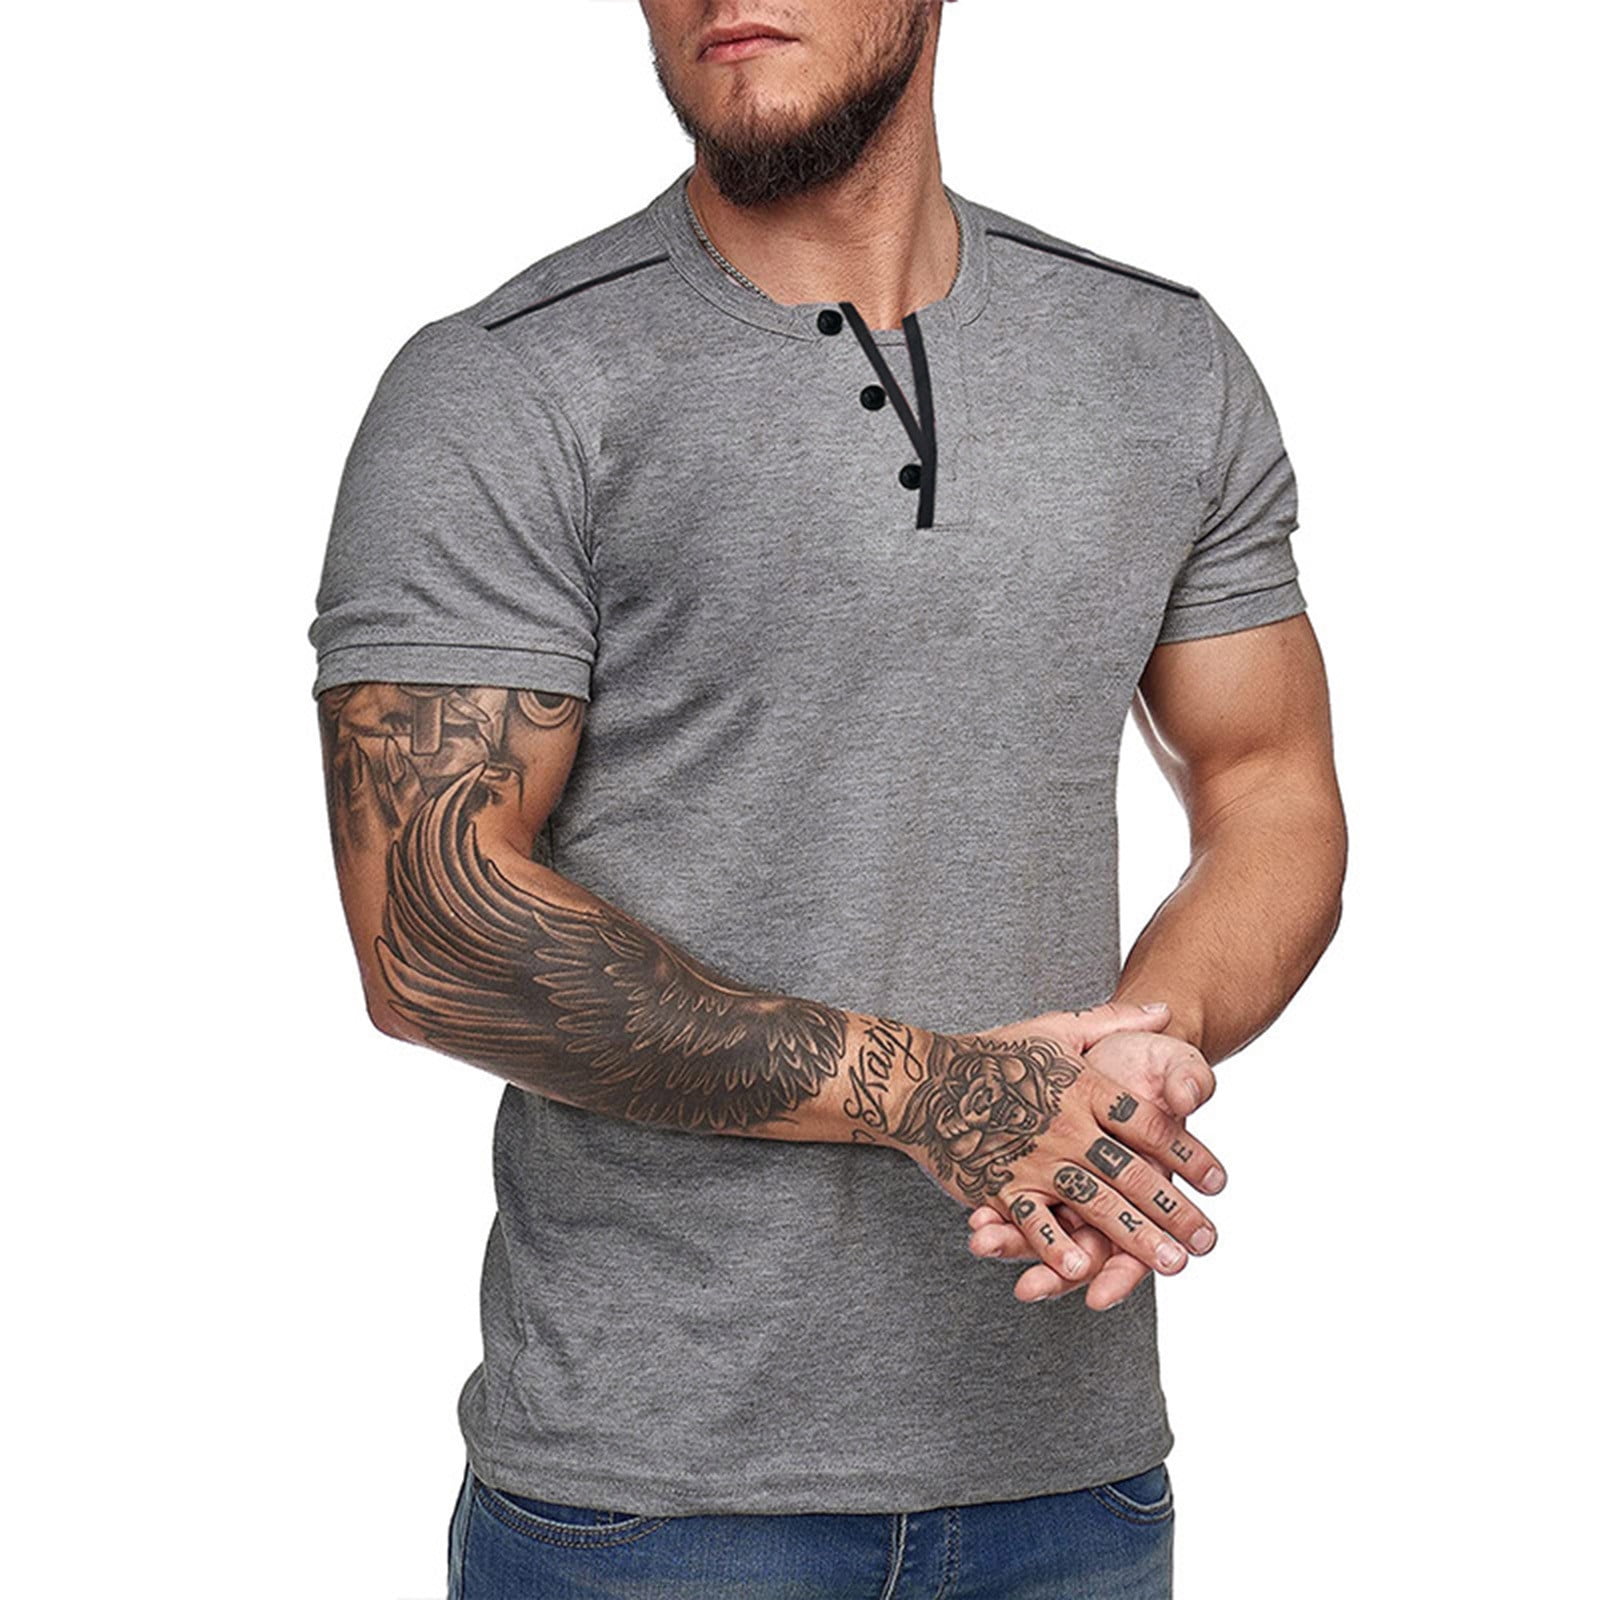 cllios Graphic Tees Men Casual 3D Print Shirt Short Sleeve Slim Fit Top ...